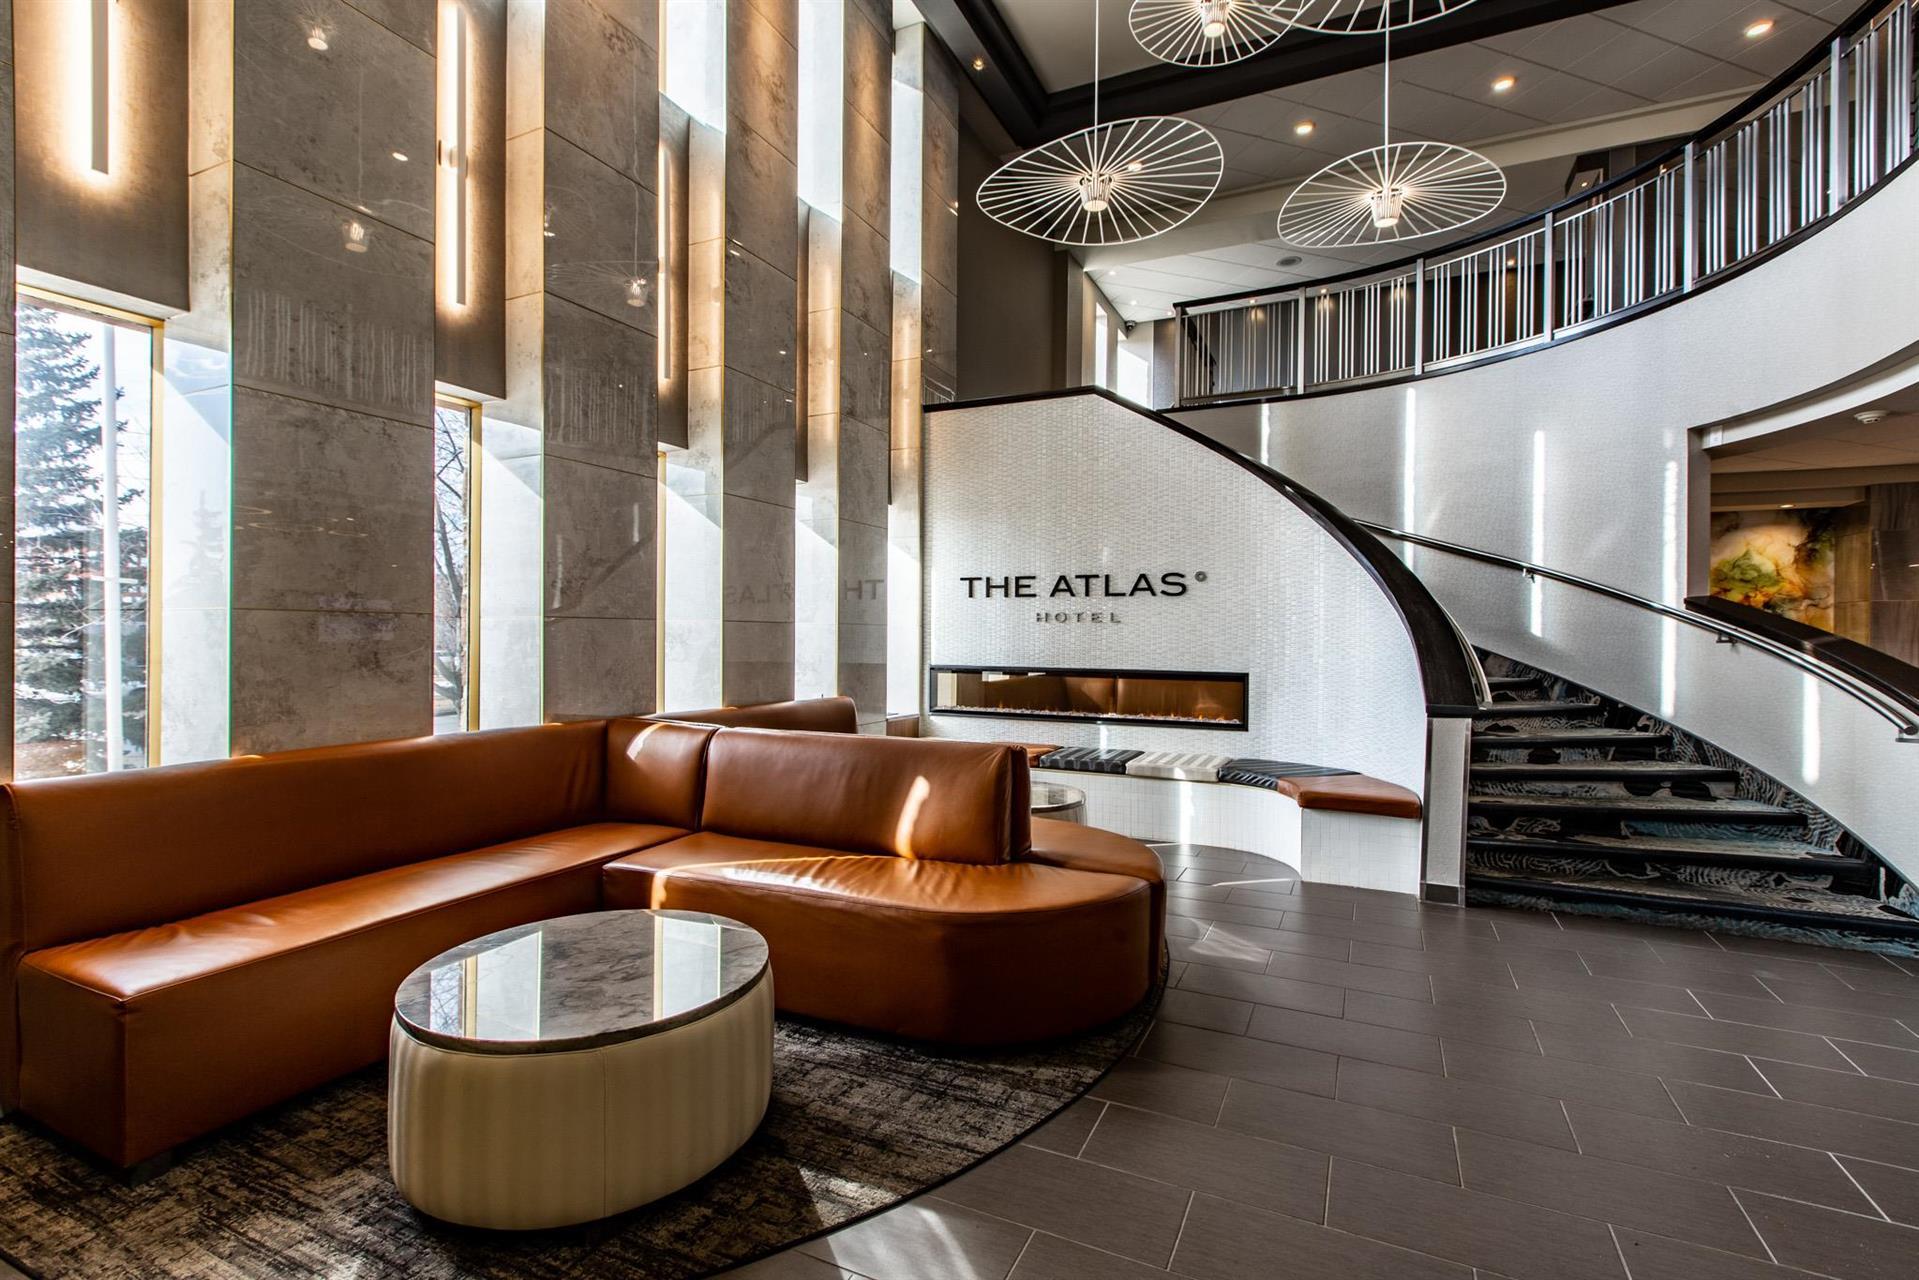 The Atlas Hotel in Regina, SK